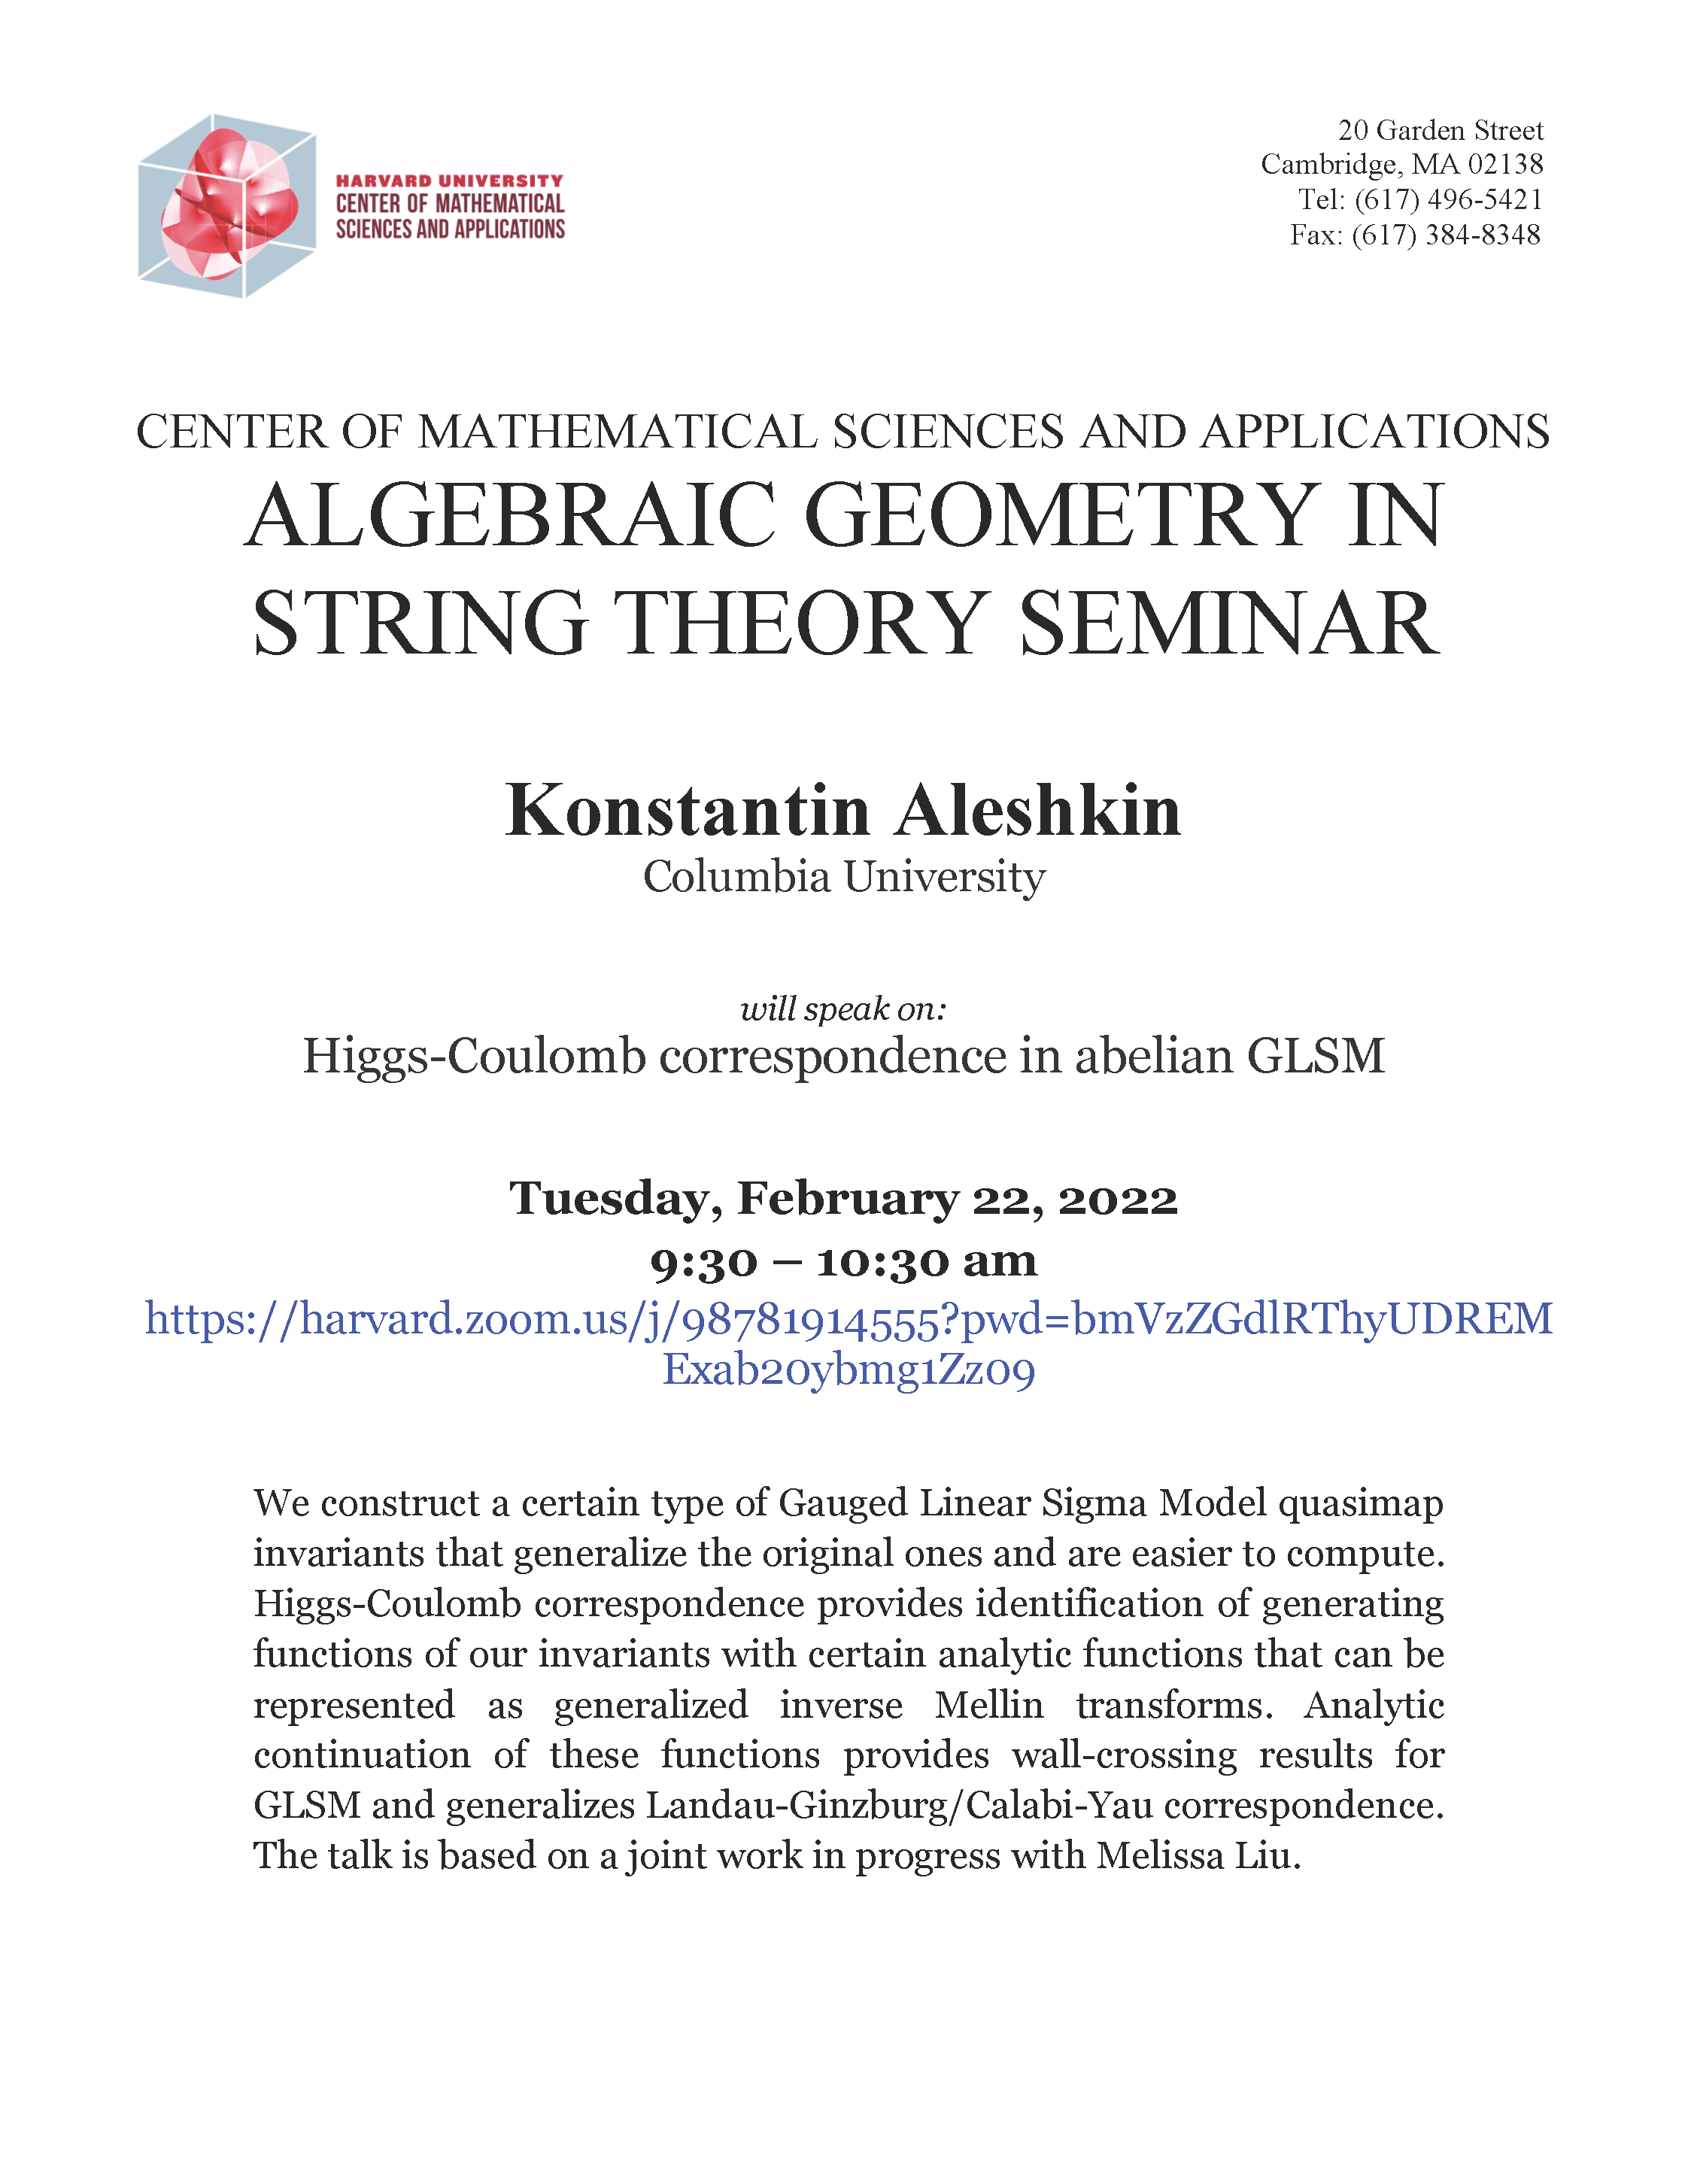 CMSA-Algebraic-Geometry-in-String-Theory-02.22.2022